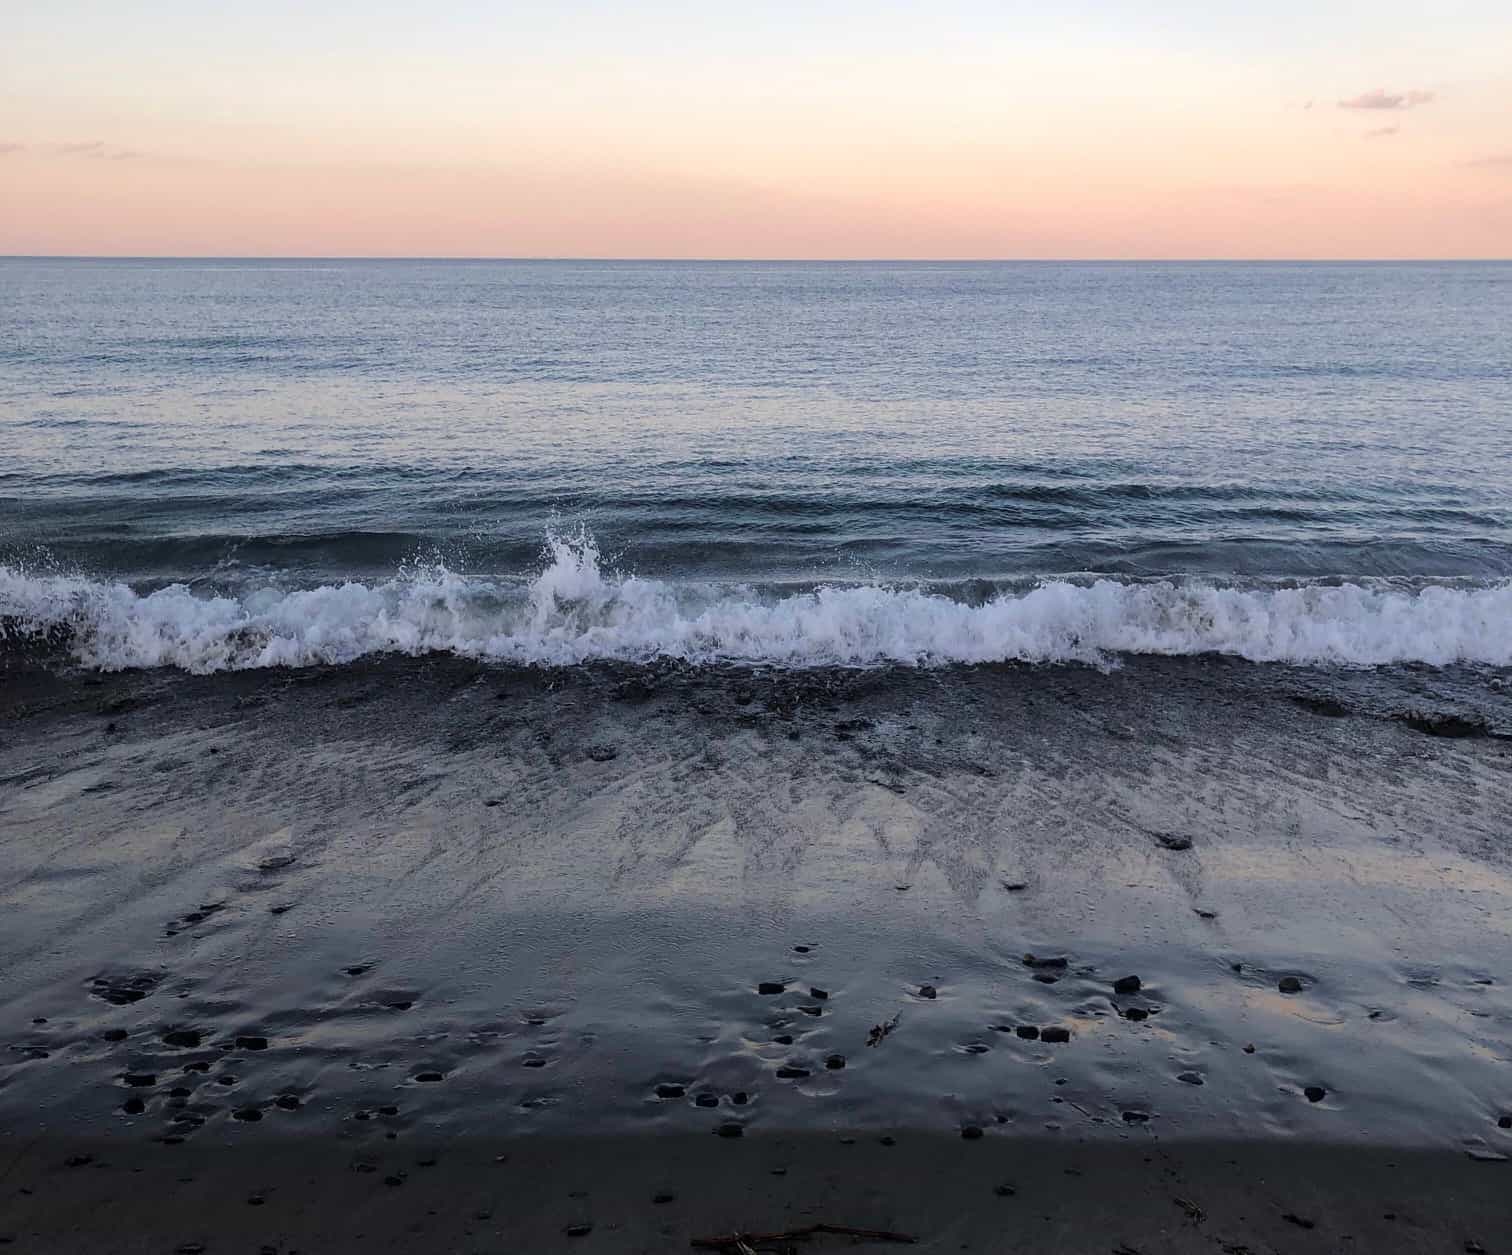 Waves crashing against the sand at sunset